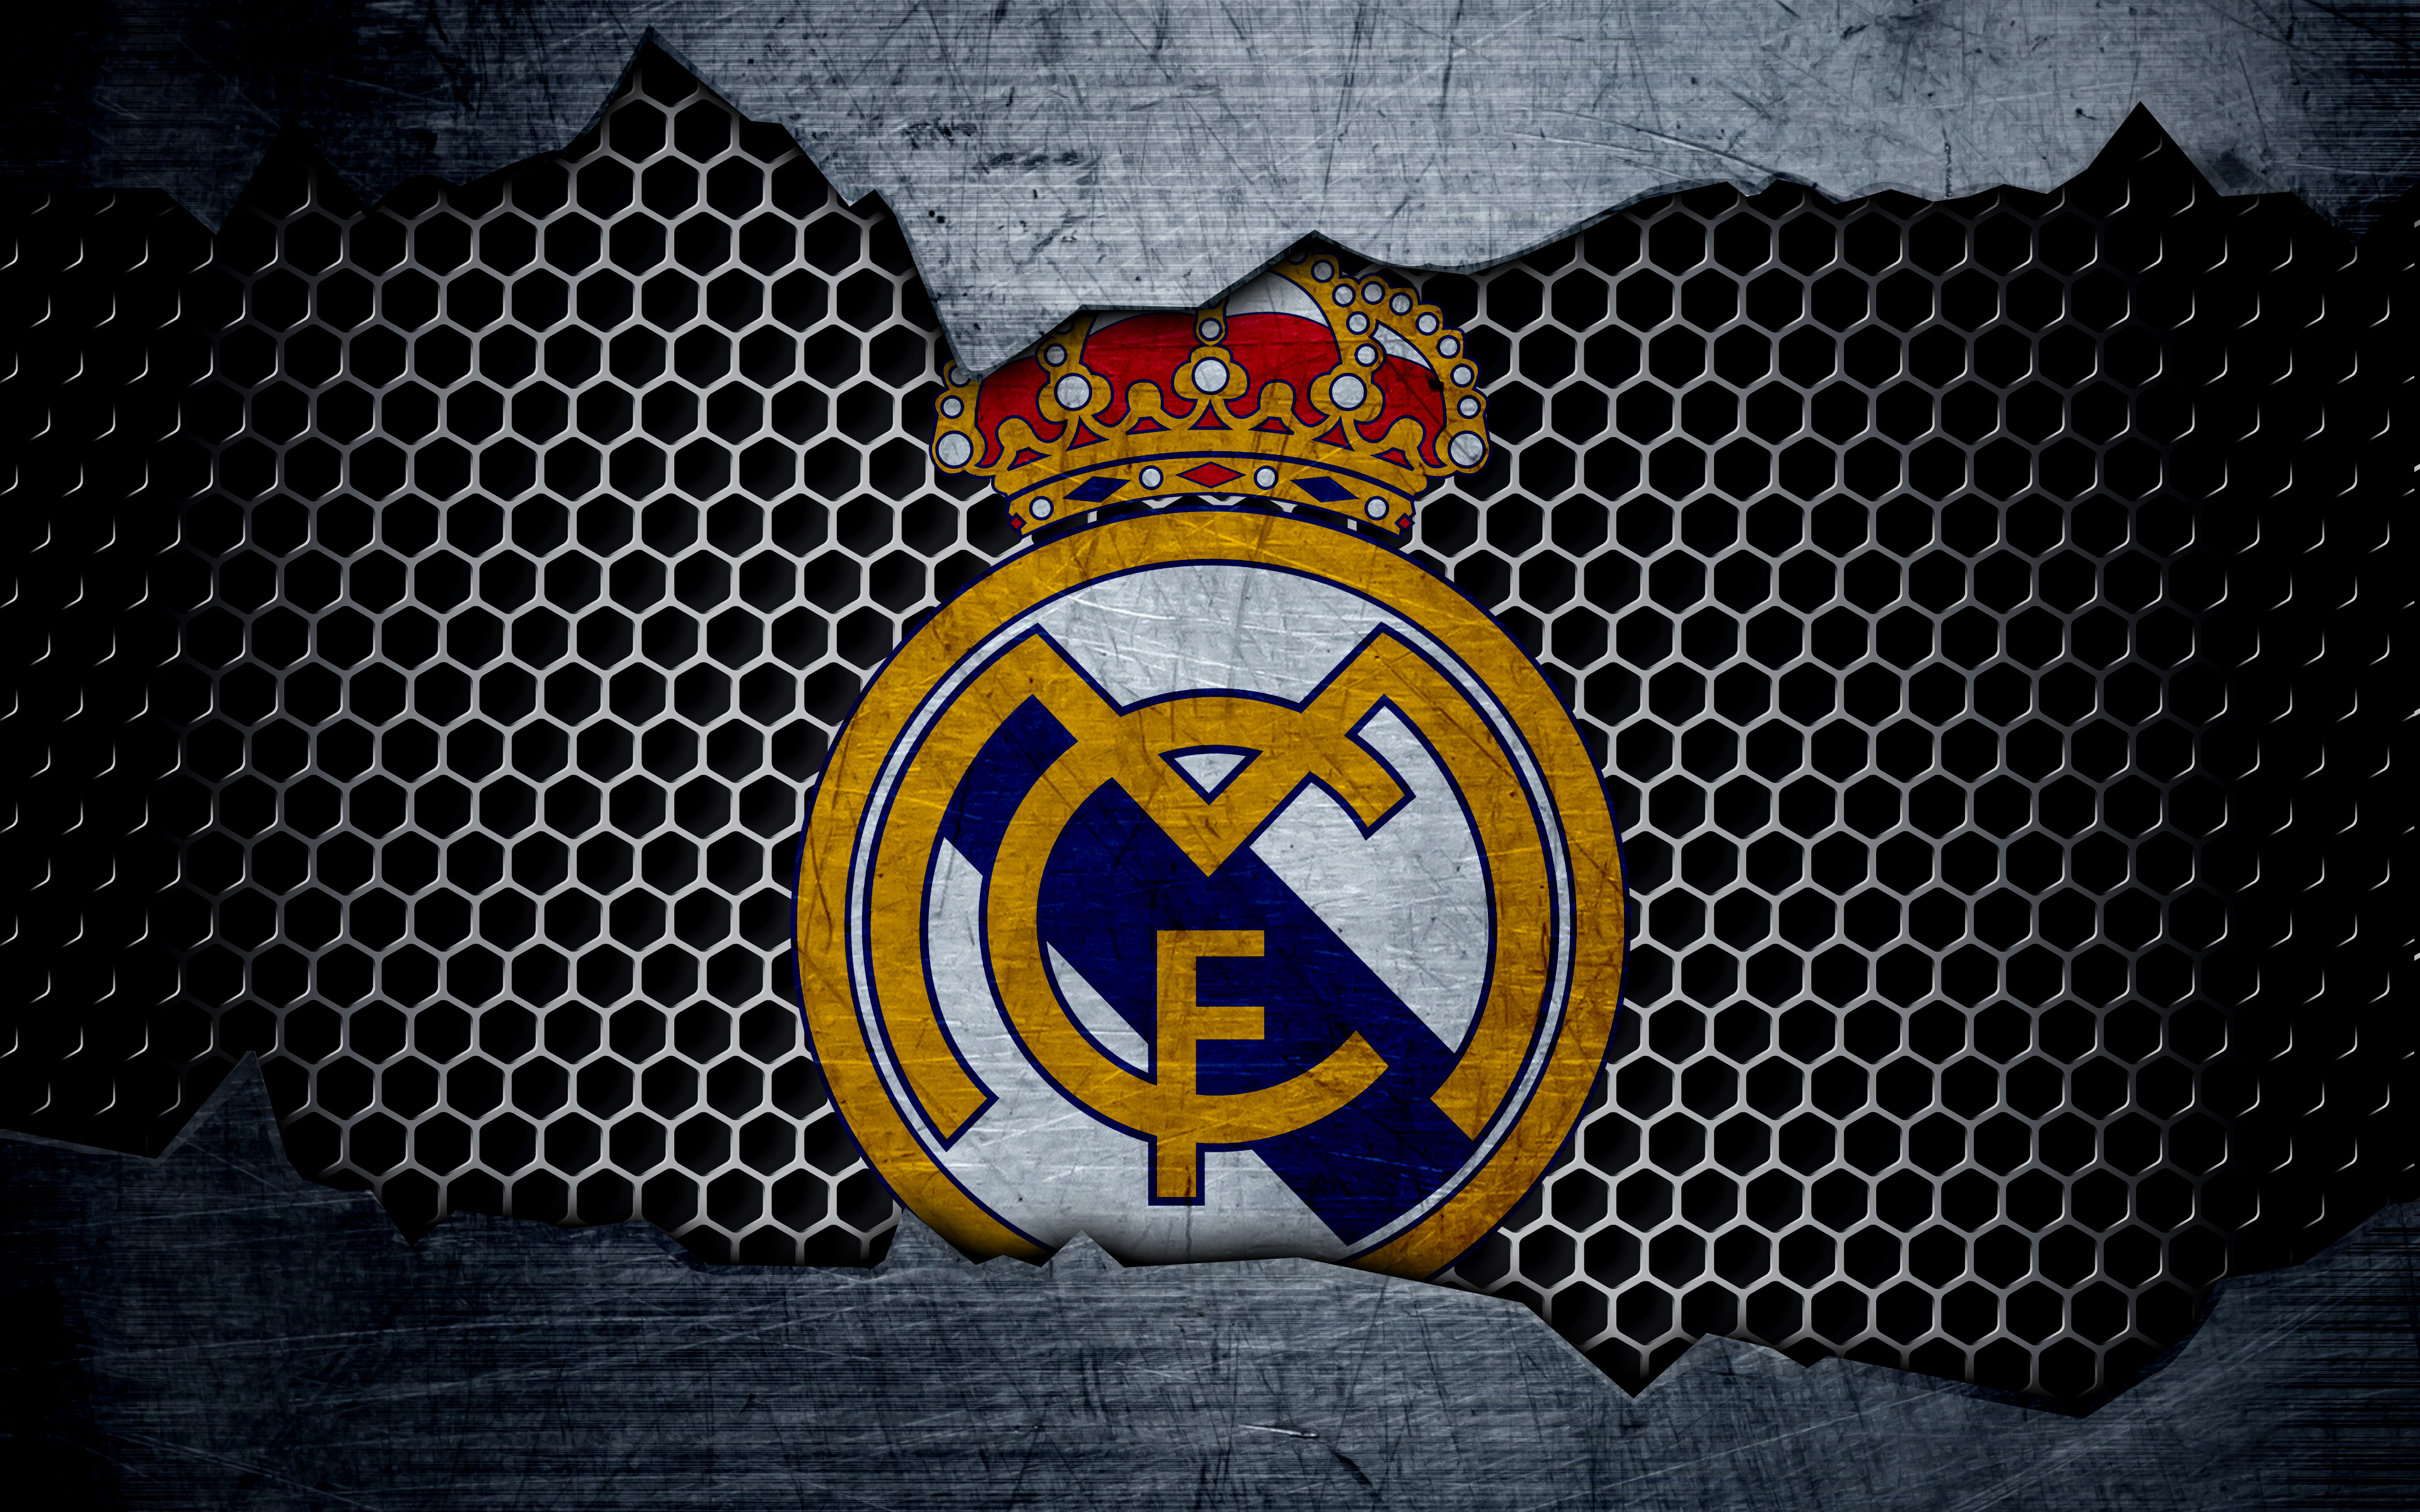 Real Madrid Logo 4k Ultra HD Wallpaper | Background Image ...